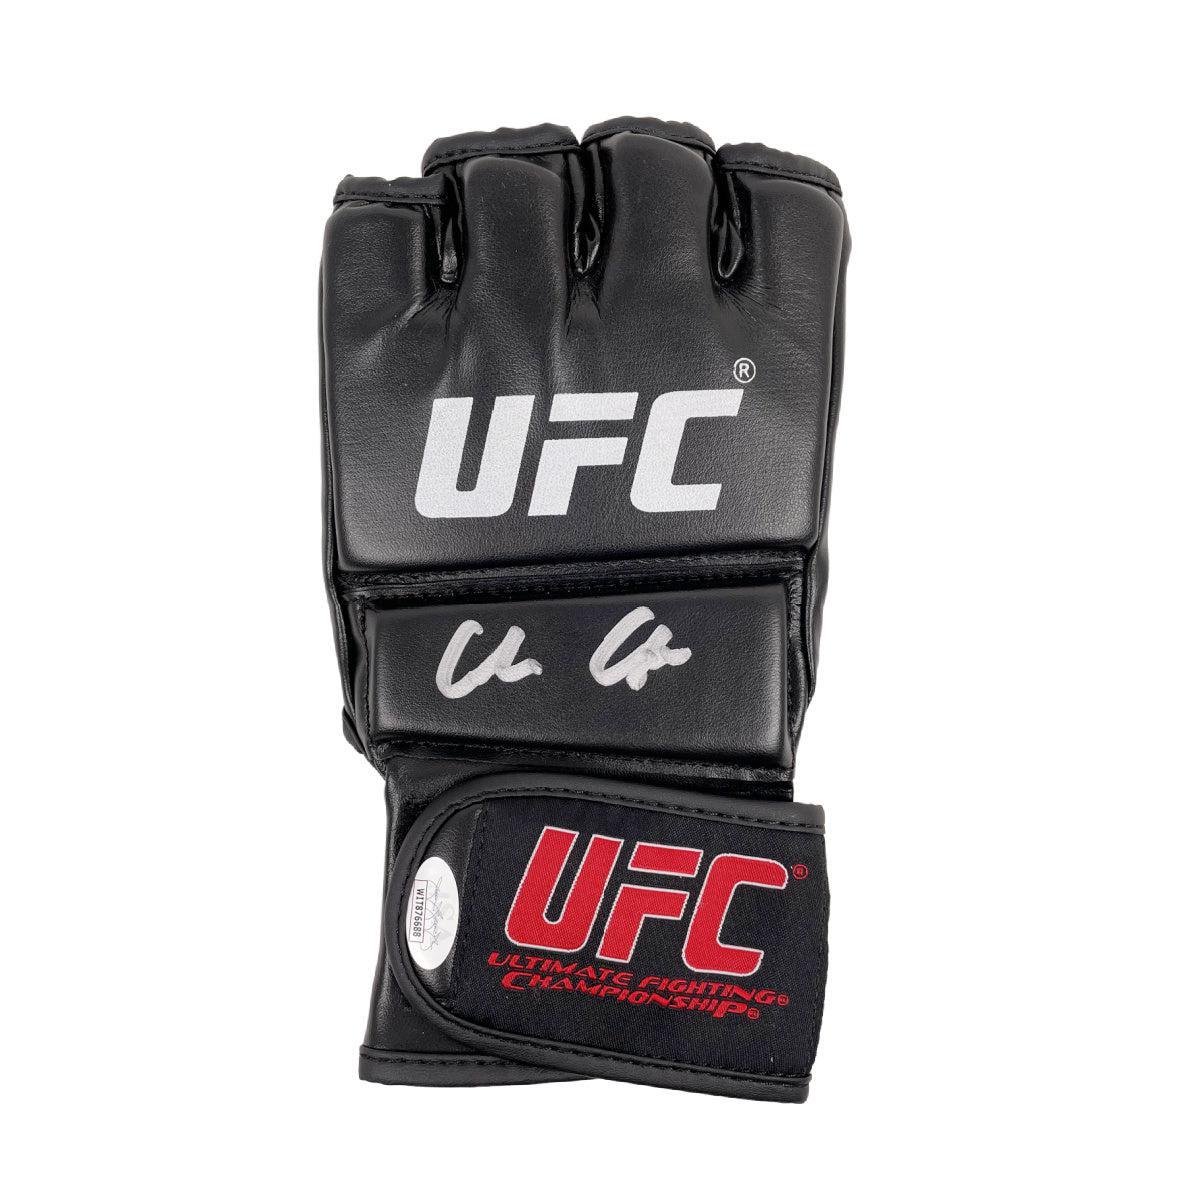 Colby Covington Signed UFC Training Glove Autographed JSA COA